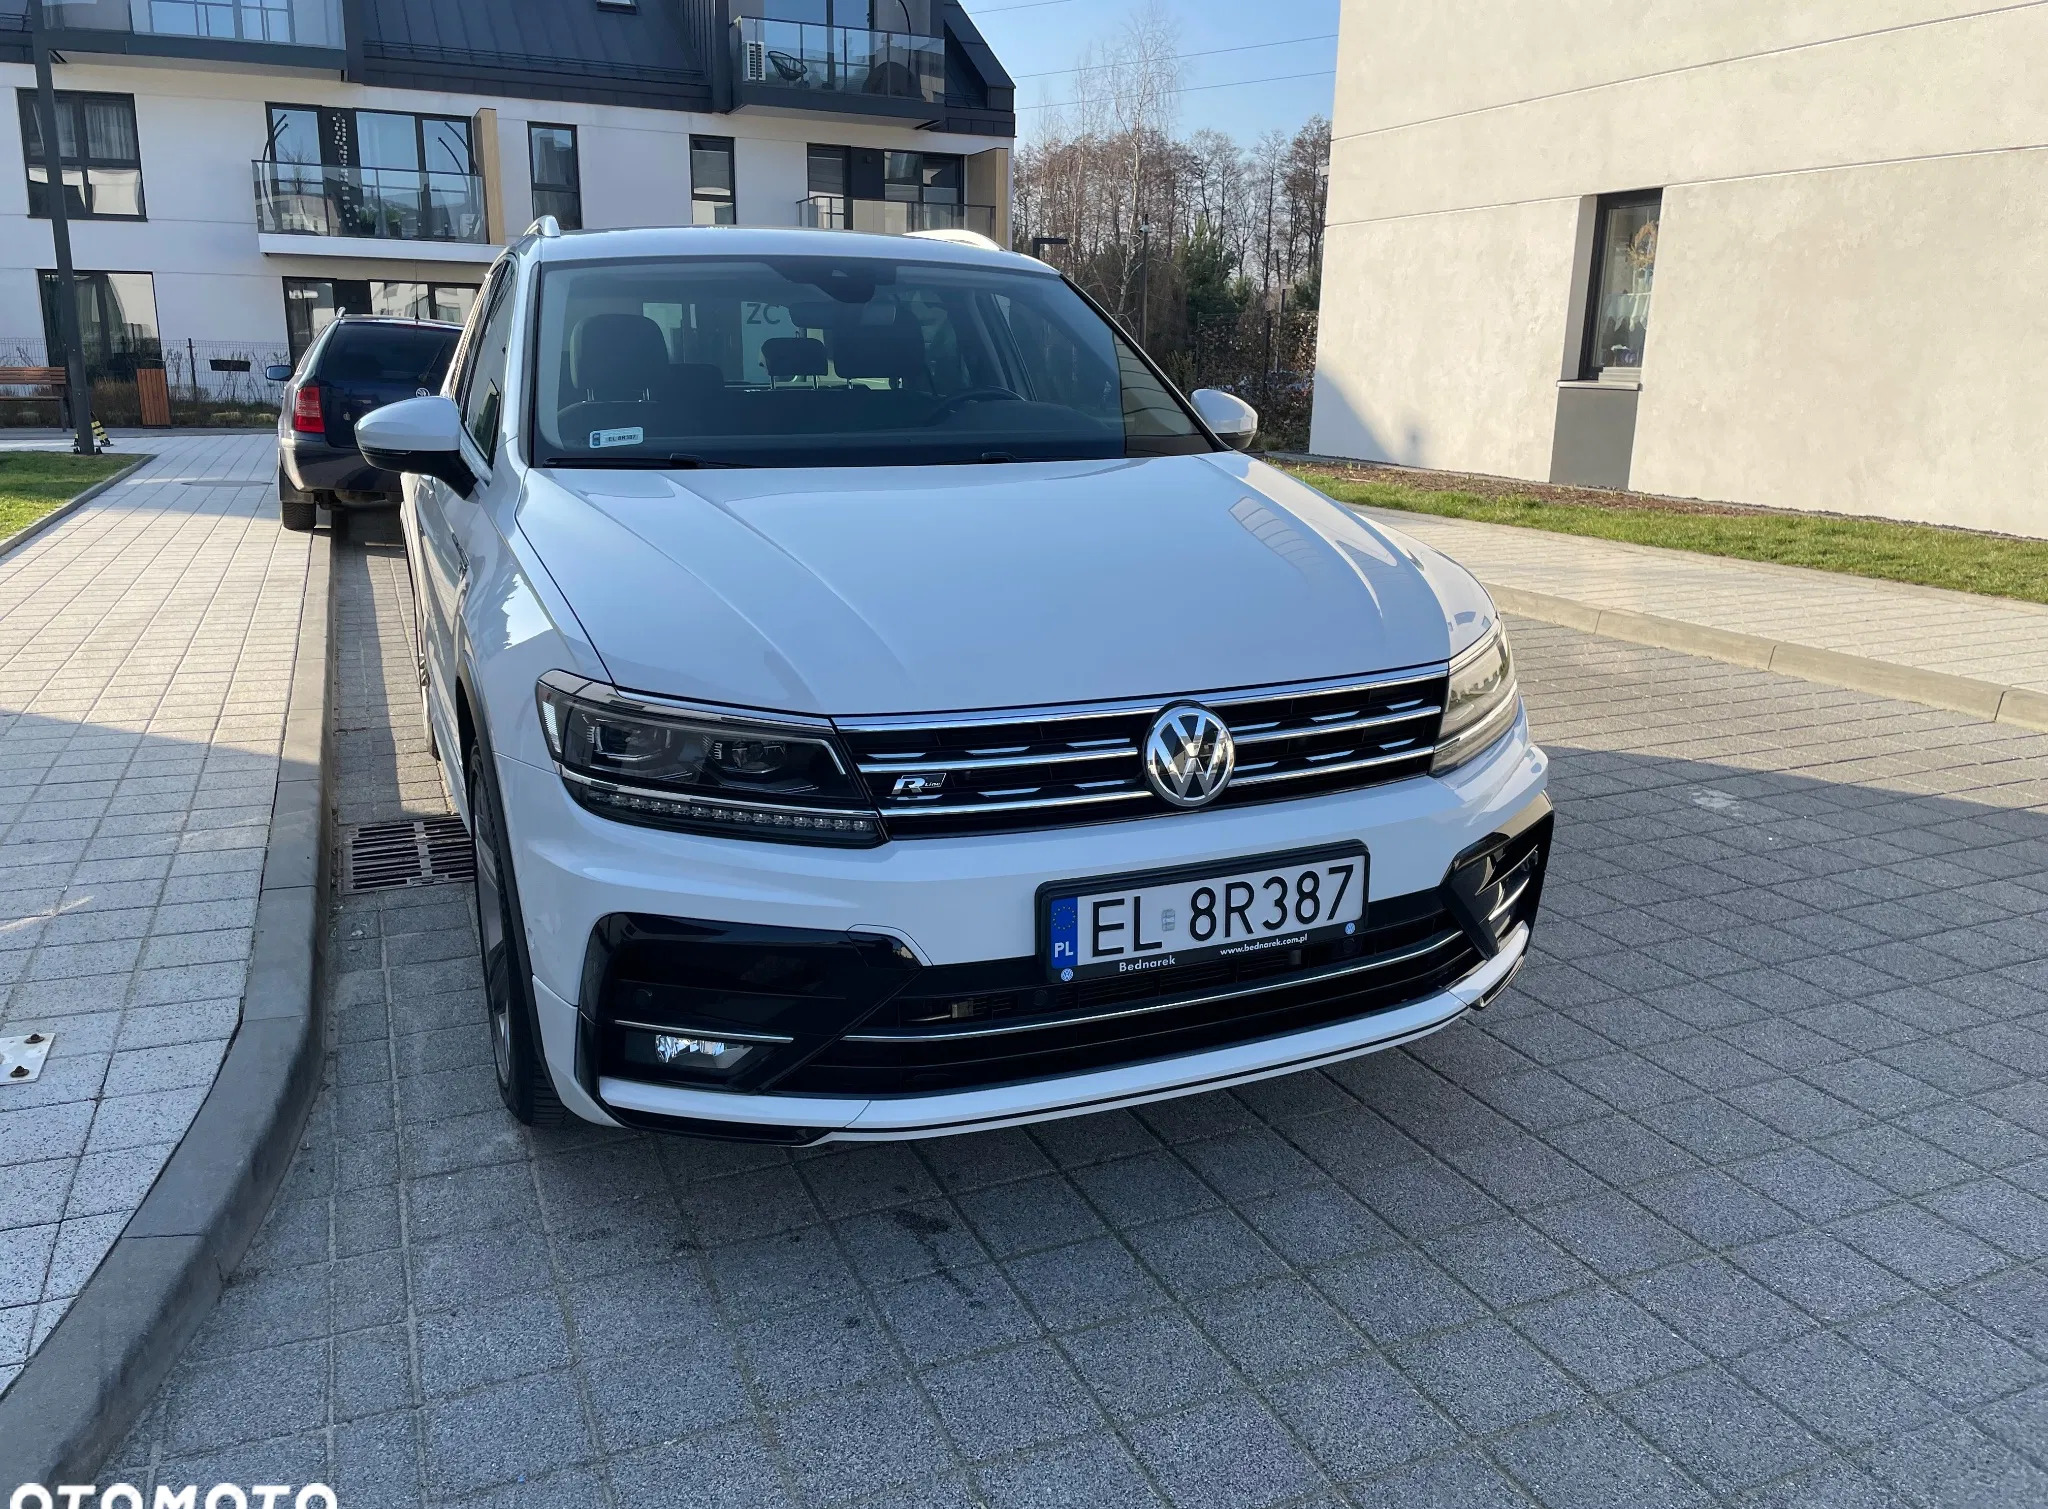 volkswagen tiguan Volkswagen Tiguan cena 134000 przebieg: 47151, rok produkcji 2019 z Łódź